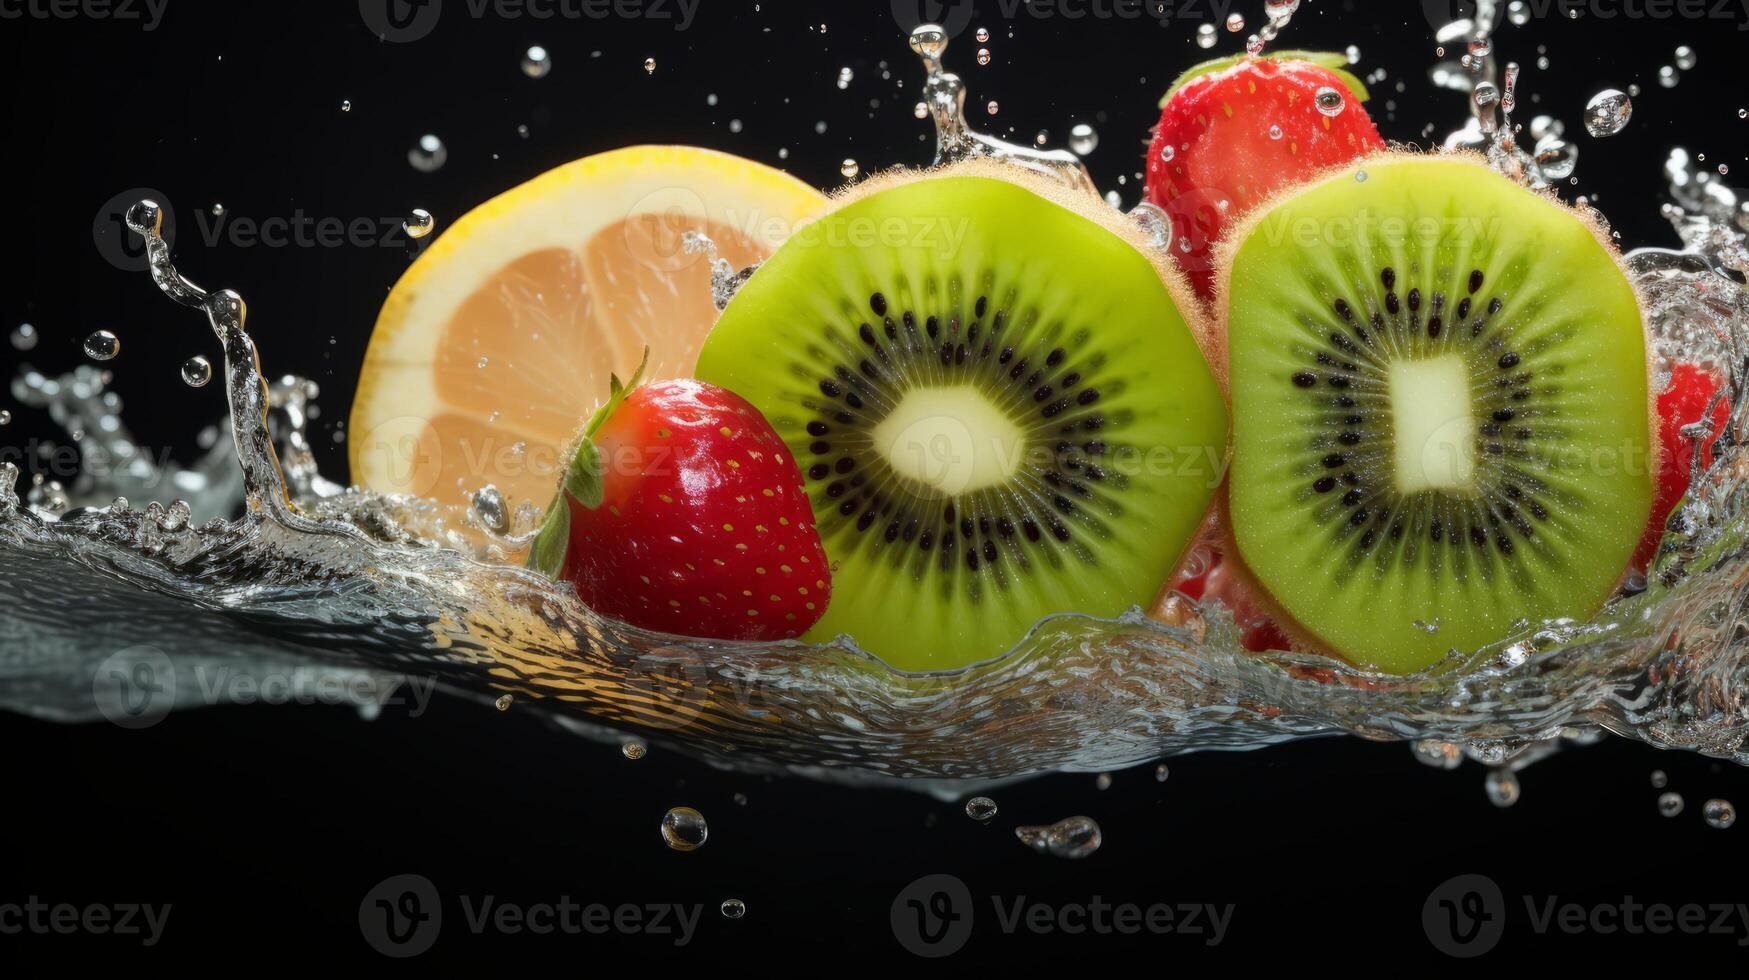 AI generated A kiwi slice making a vibrant splash in a fruit salad photo